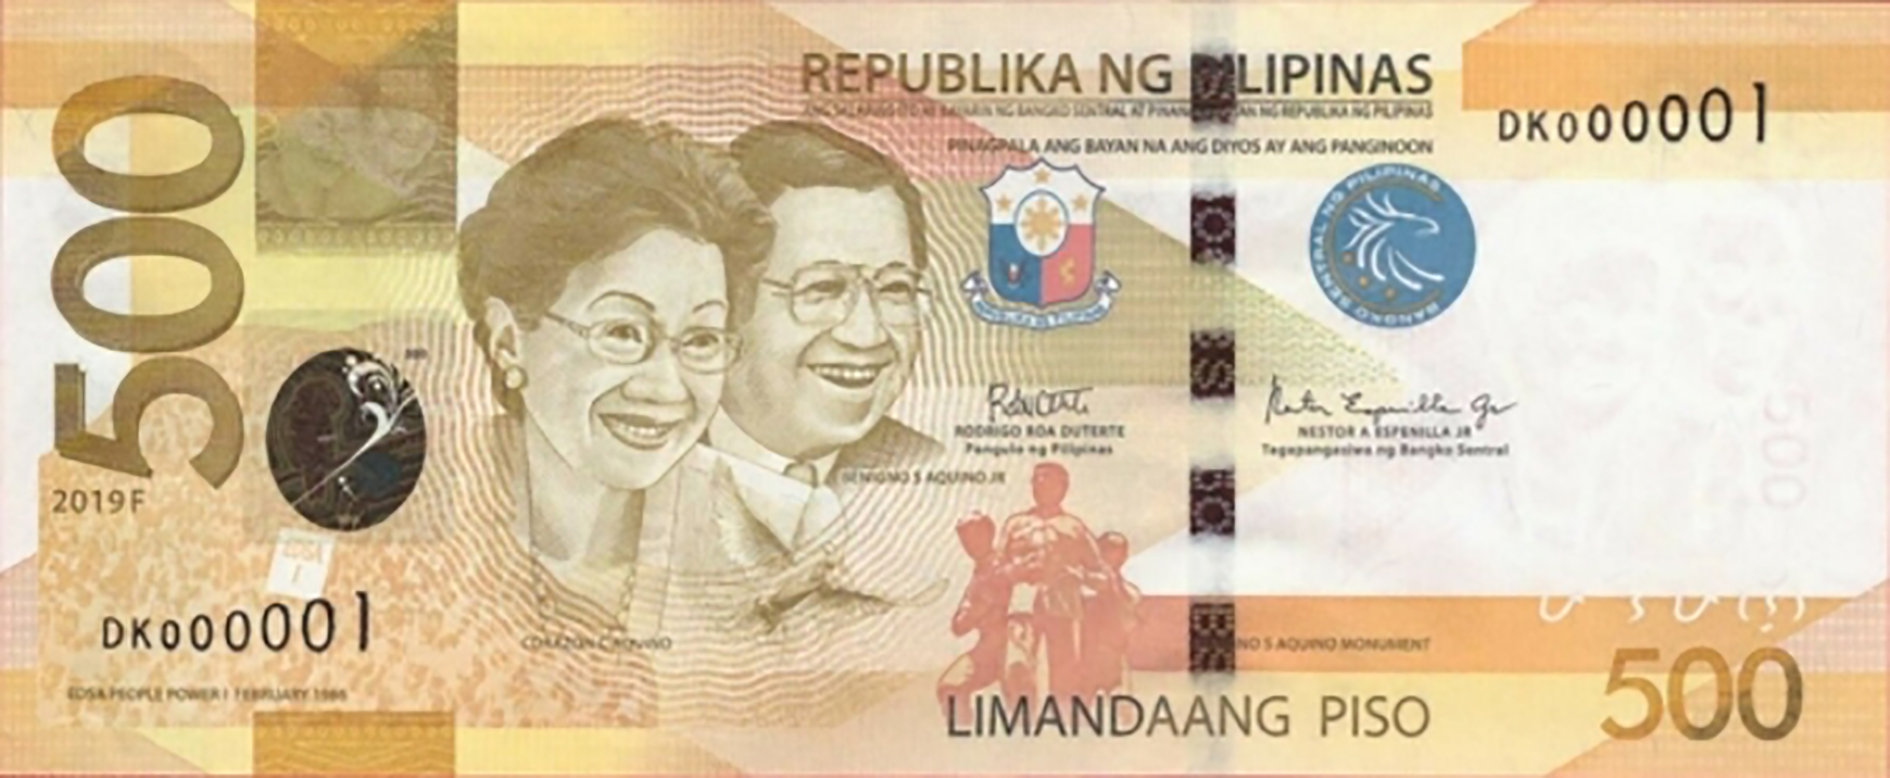 Philippines new date (2019F) 500-peso note (B1088e) confirmed – BanknoteNews